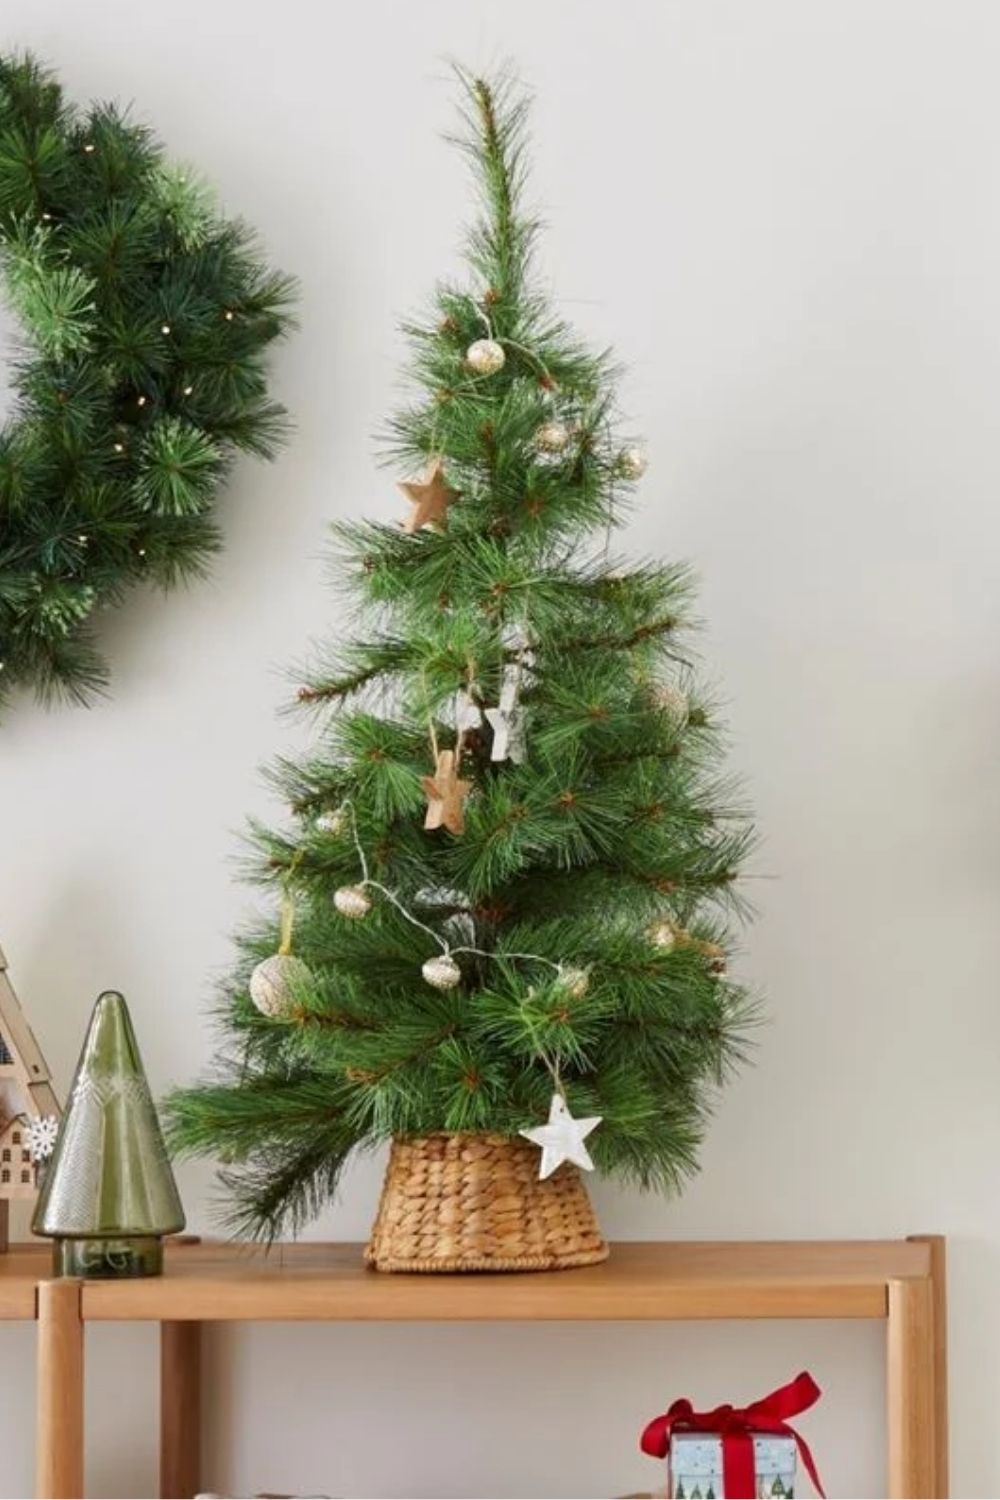 Adairs mini Christmas tree